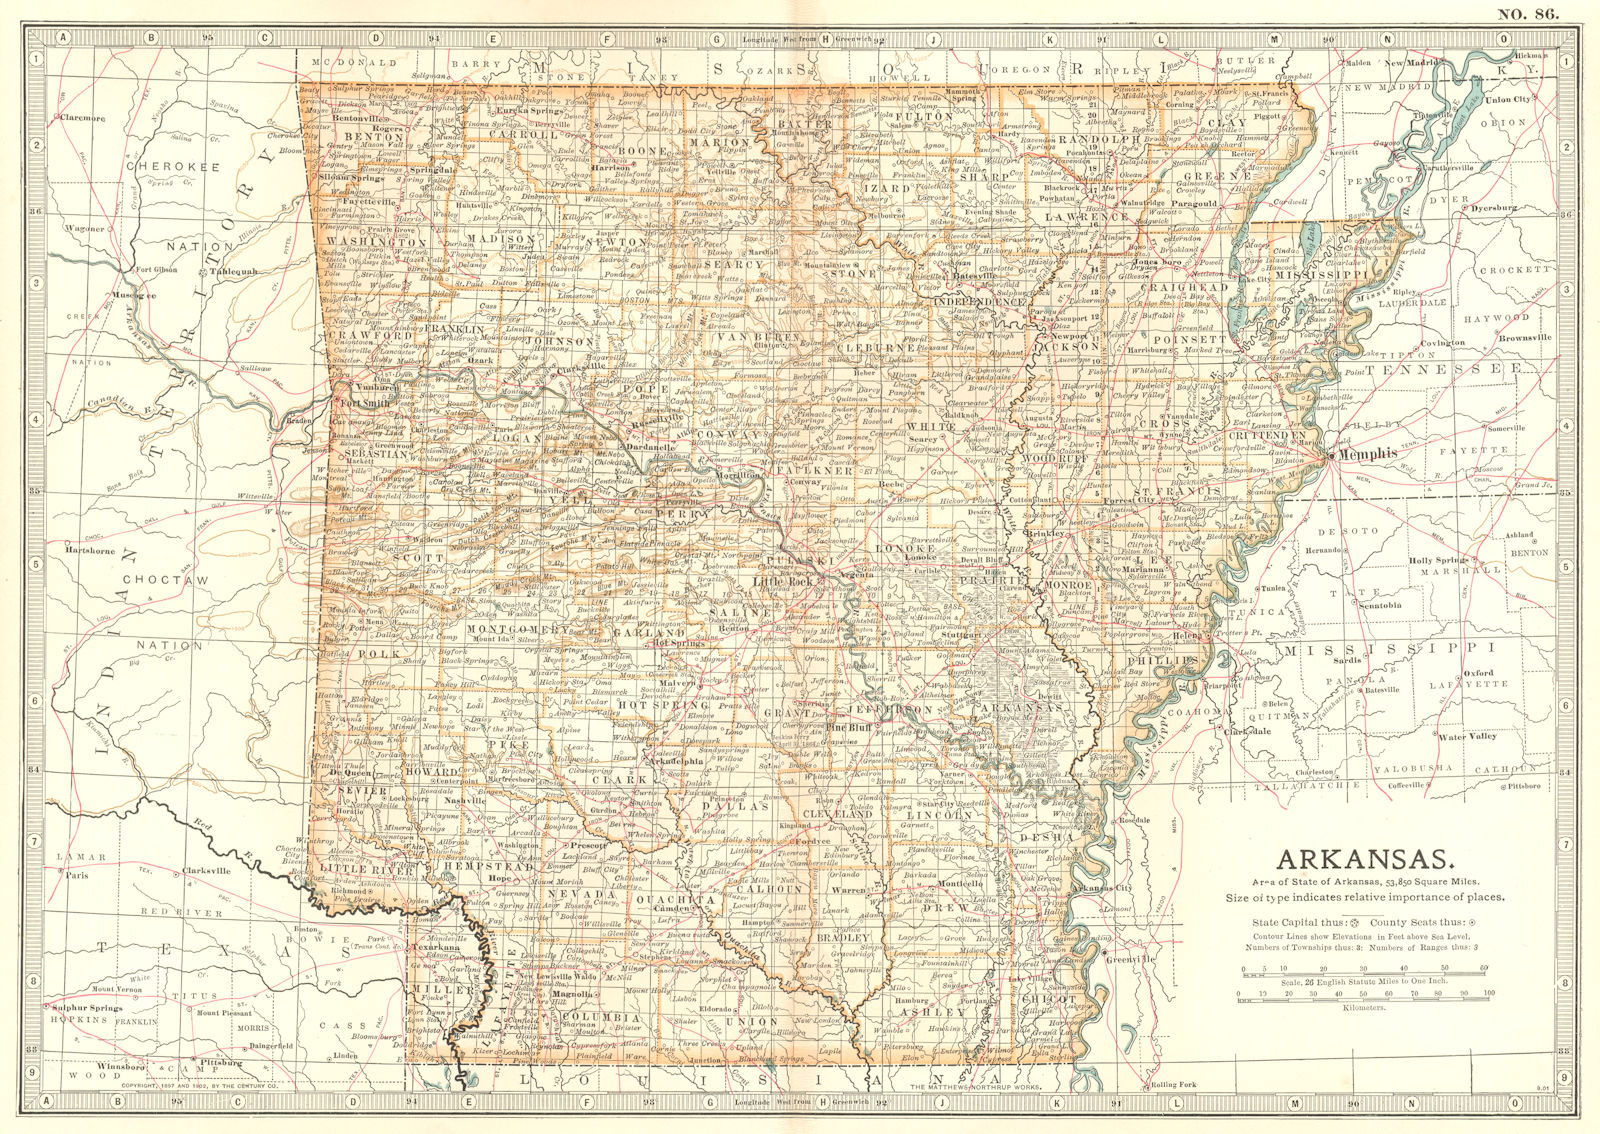 ARKANSAS. State map showing counties & civil war battlefields/dates 1903